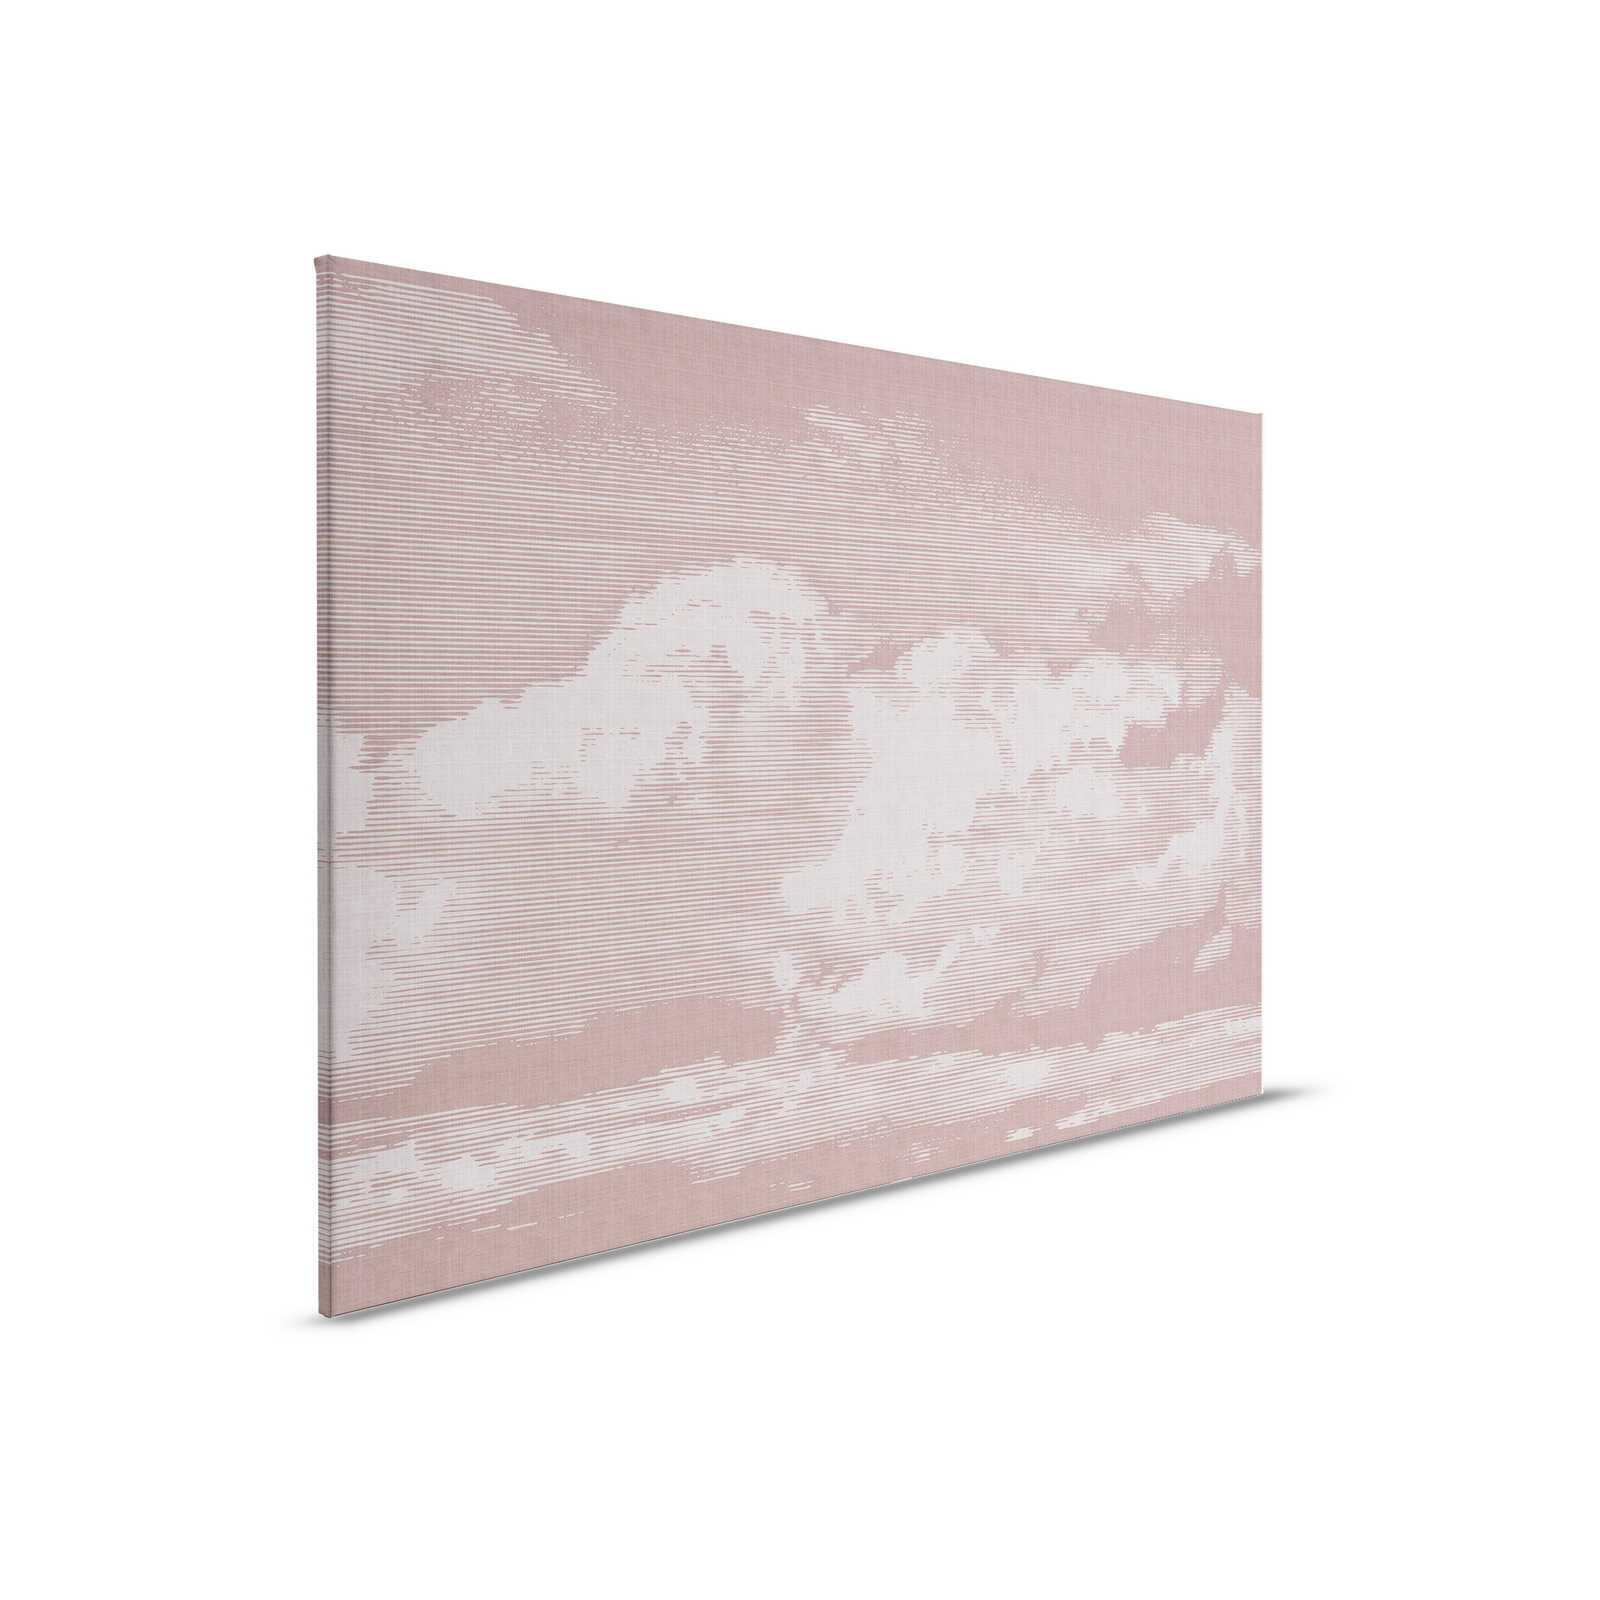 Nubes 3 - Cuadro lienzo celestial con motivo de nubes - Aspecto lino natural - 0,90 m x 0,60 m
